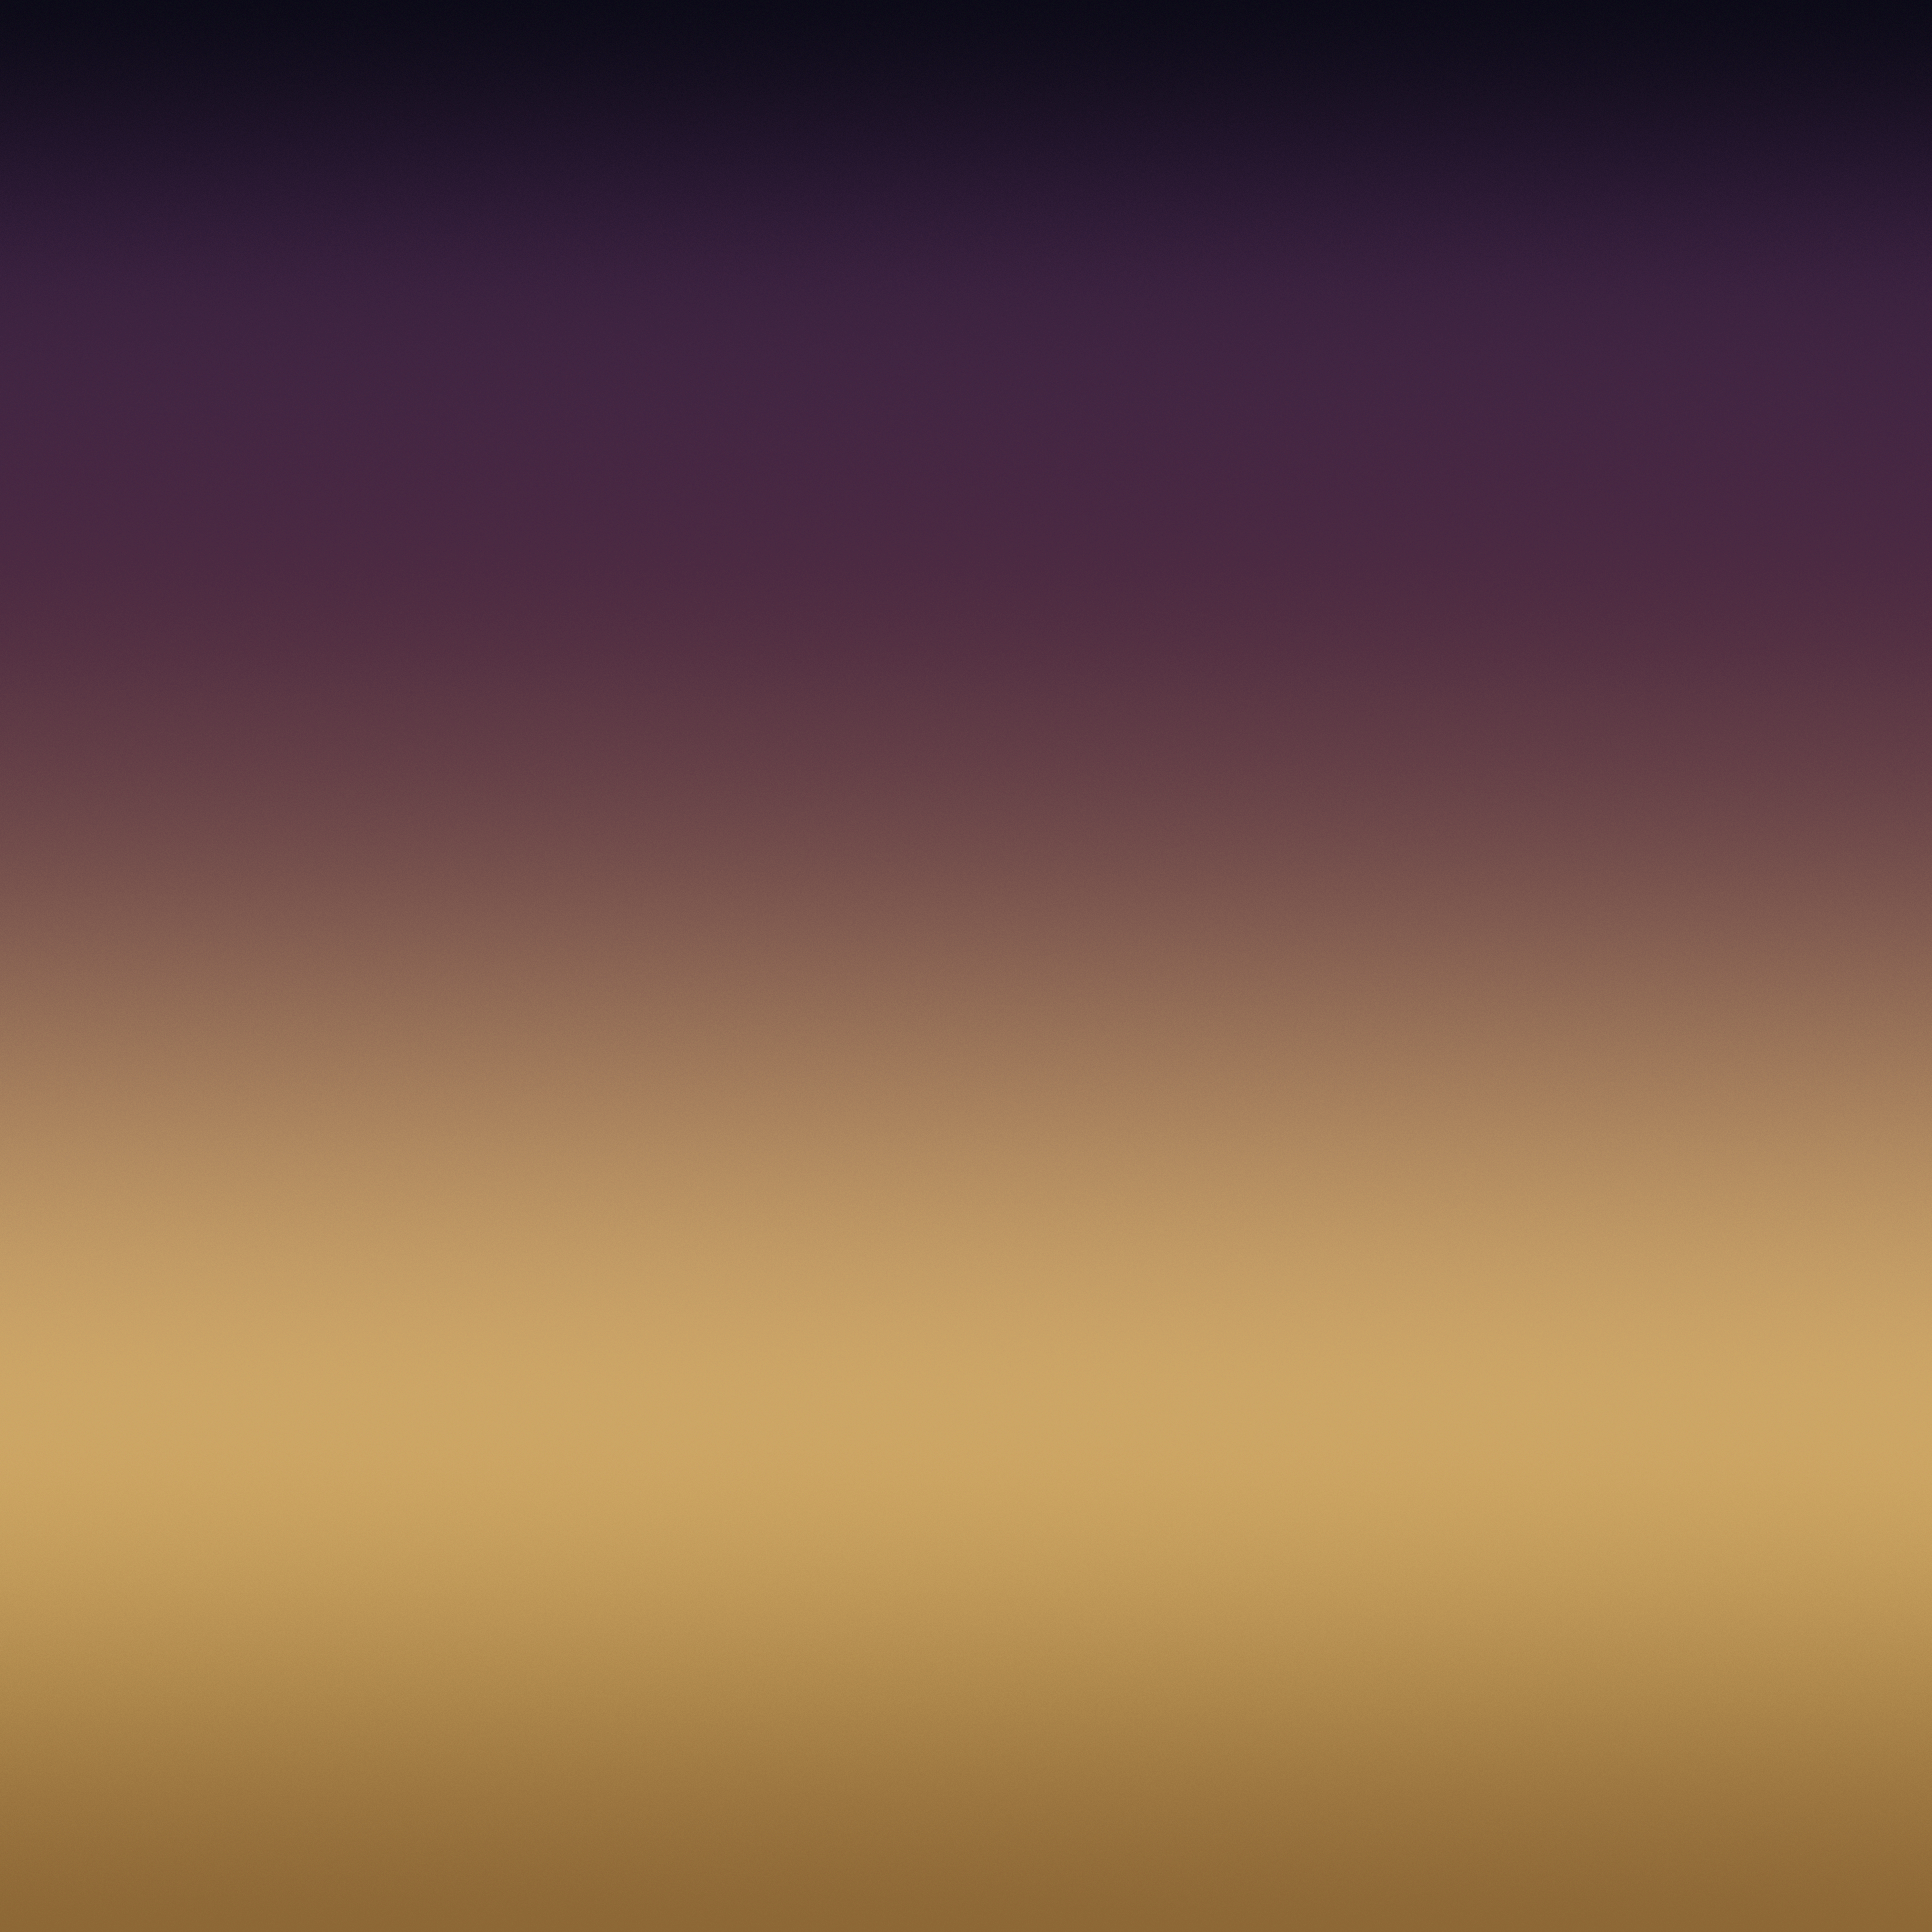 galaxy s8 fondo de pantalla,cielo,púrpura,violeta,marrón,amarillo